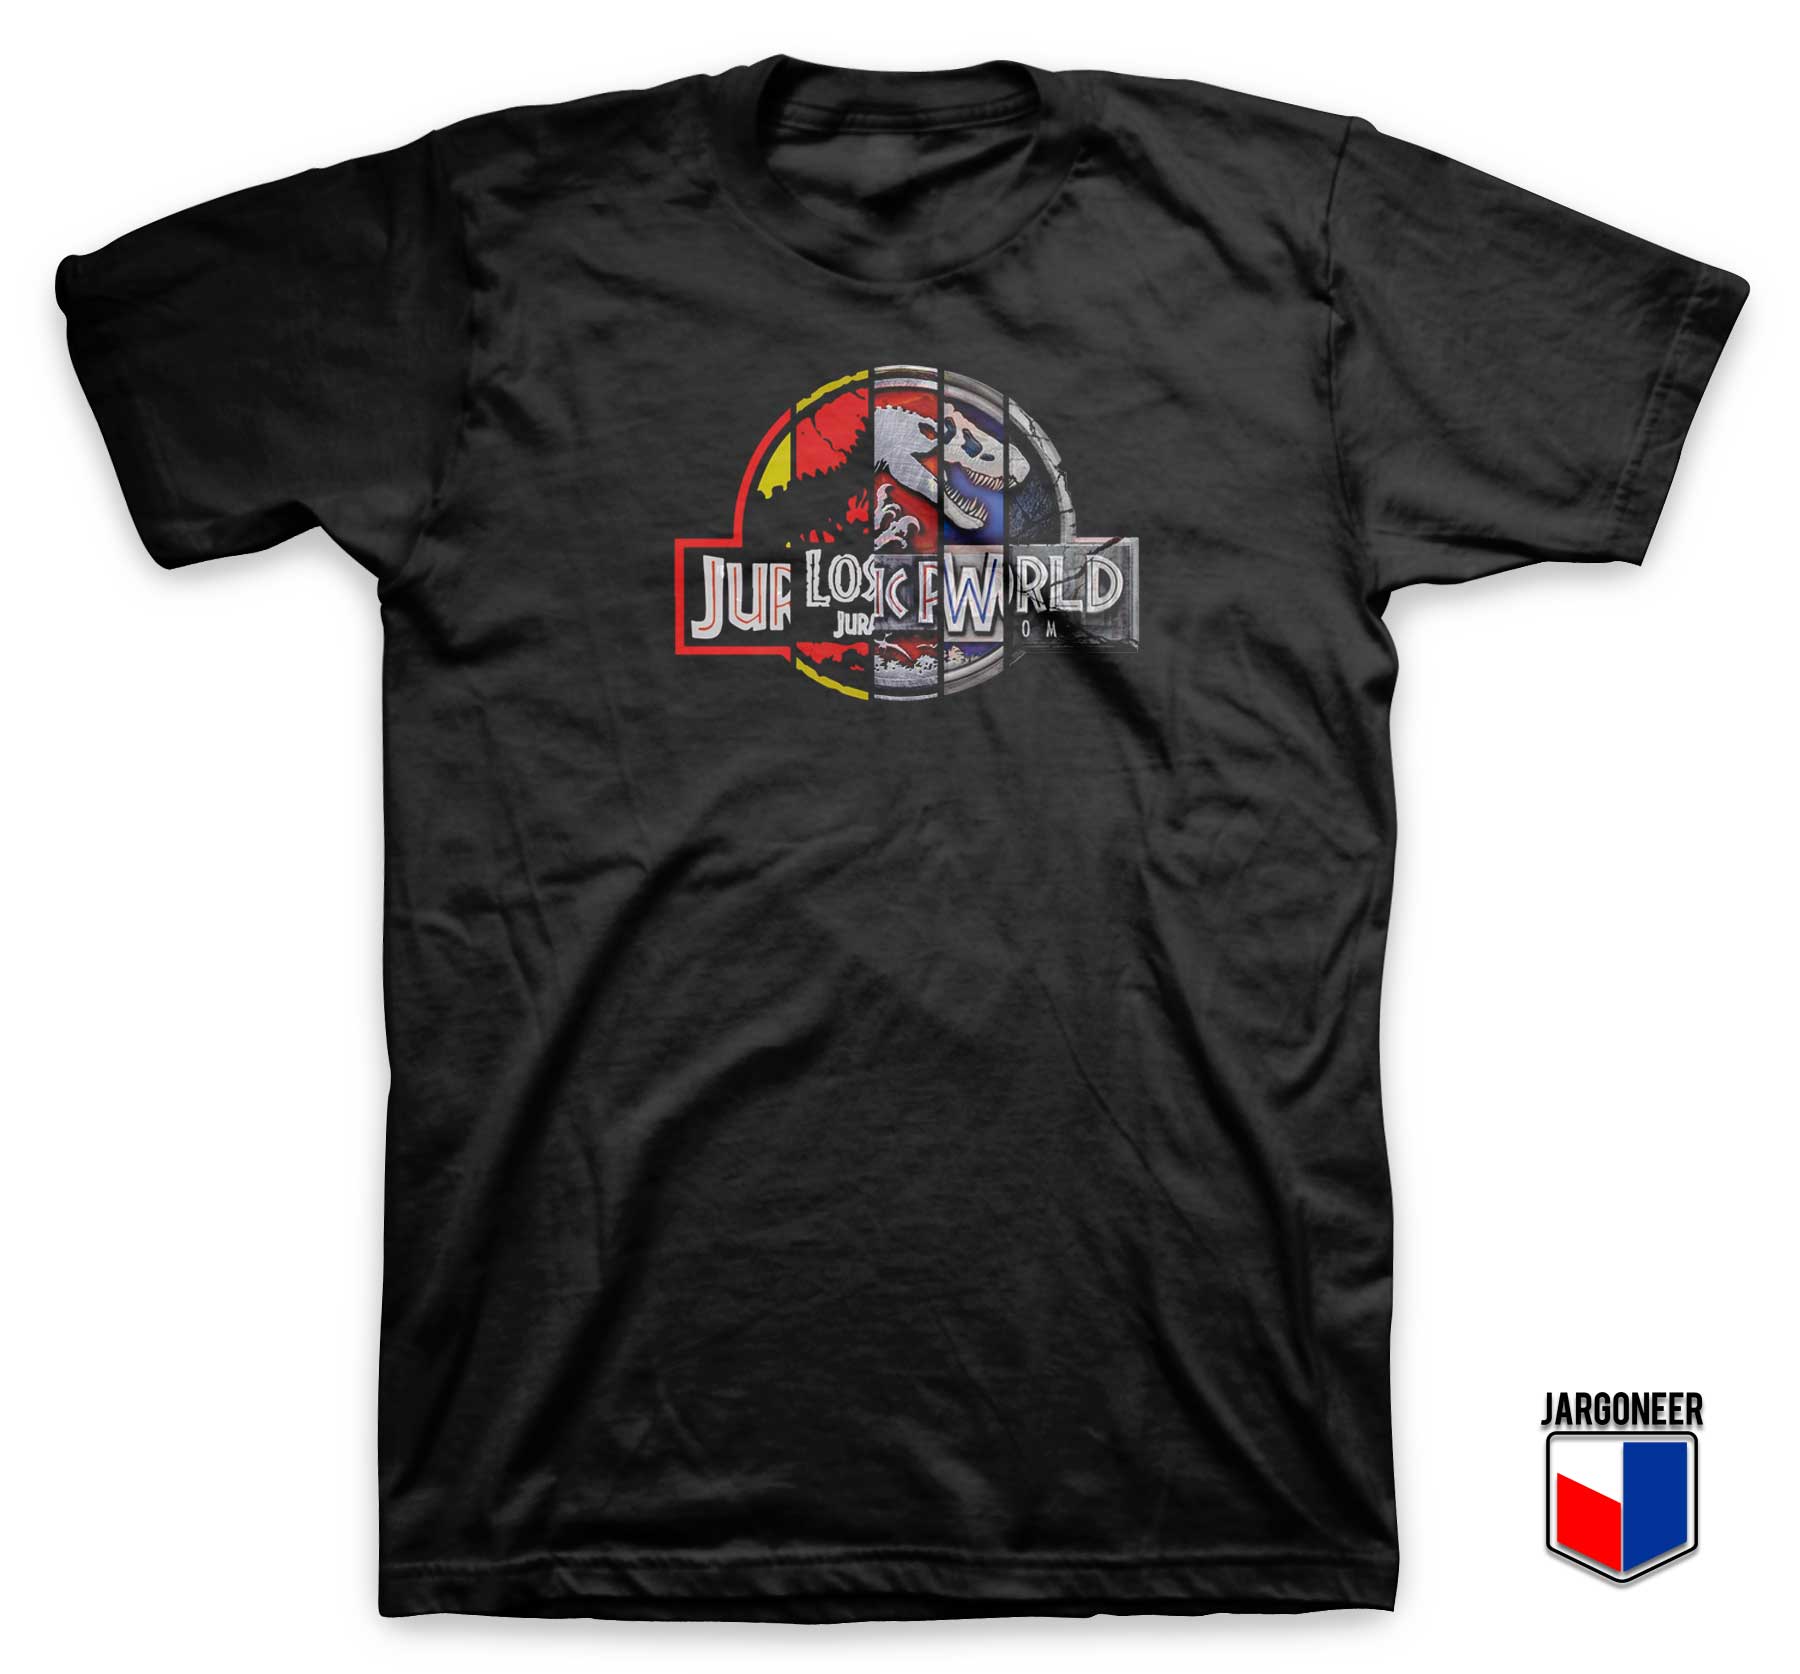 Jurassic Park 25th Anniversary T Shirt - Shop Unique Graphic Cool Shirt Designs